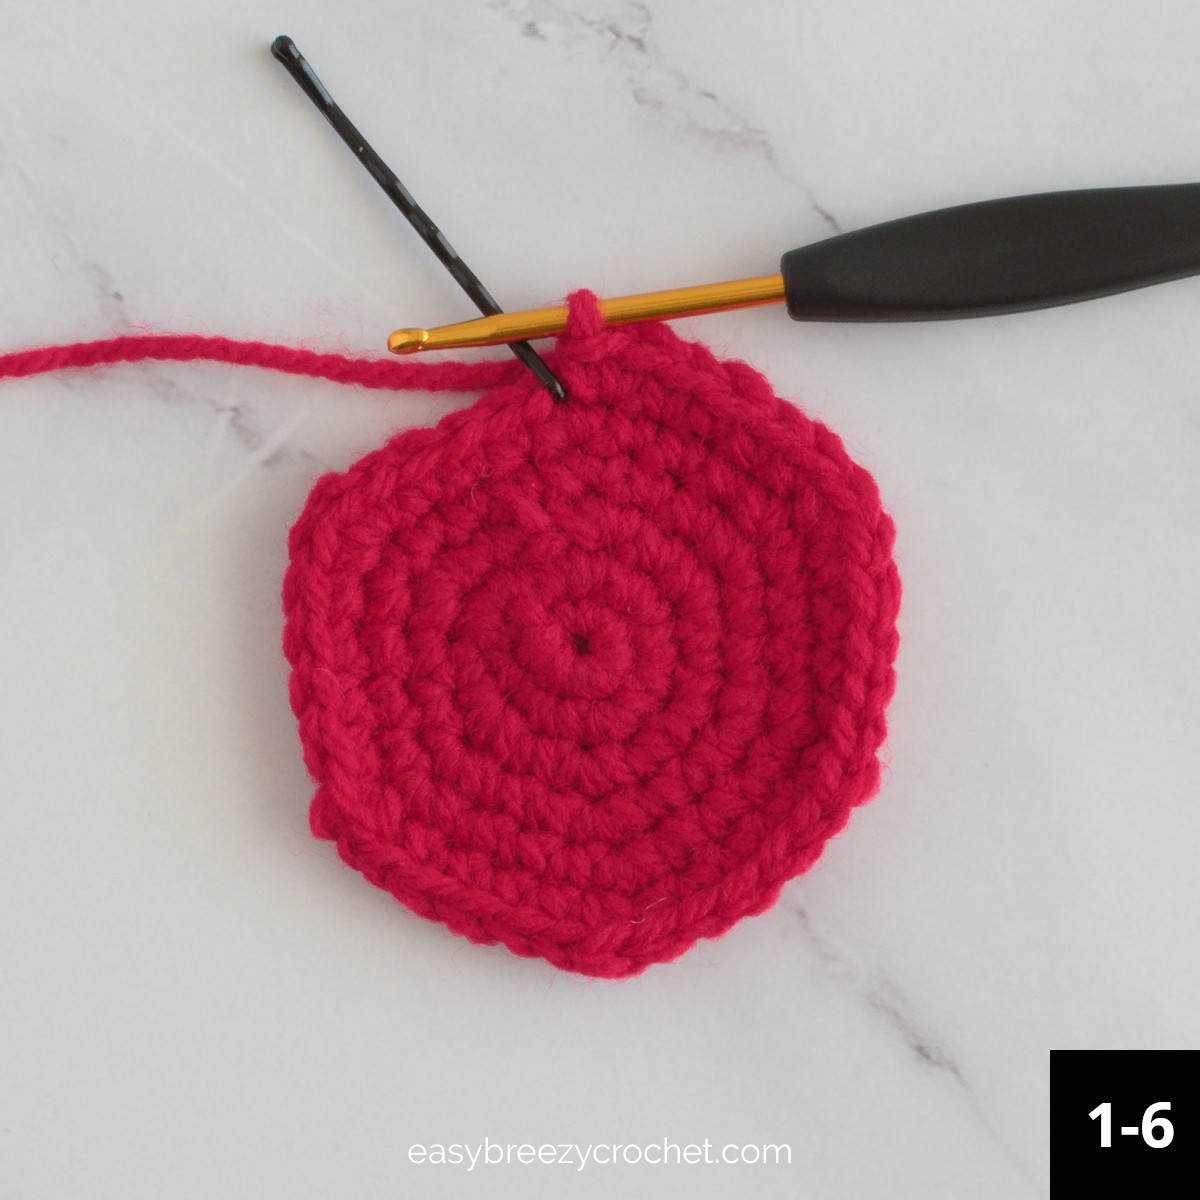 A red crochet circle.